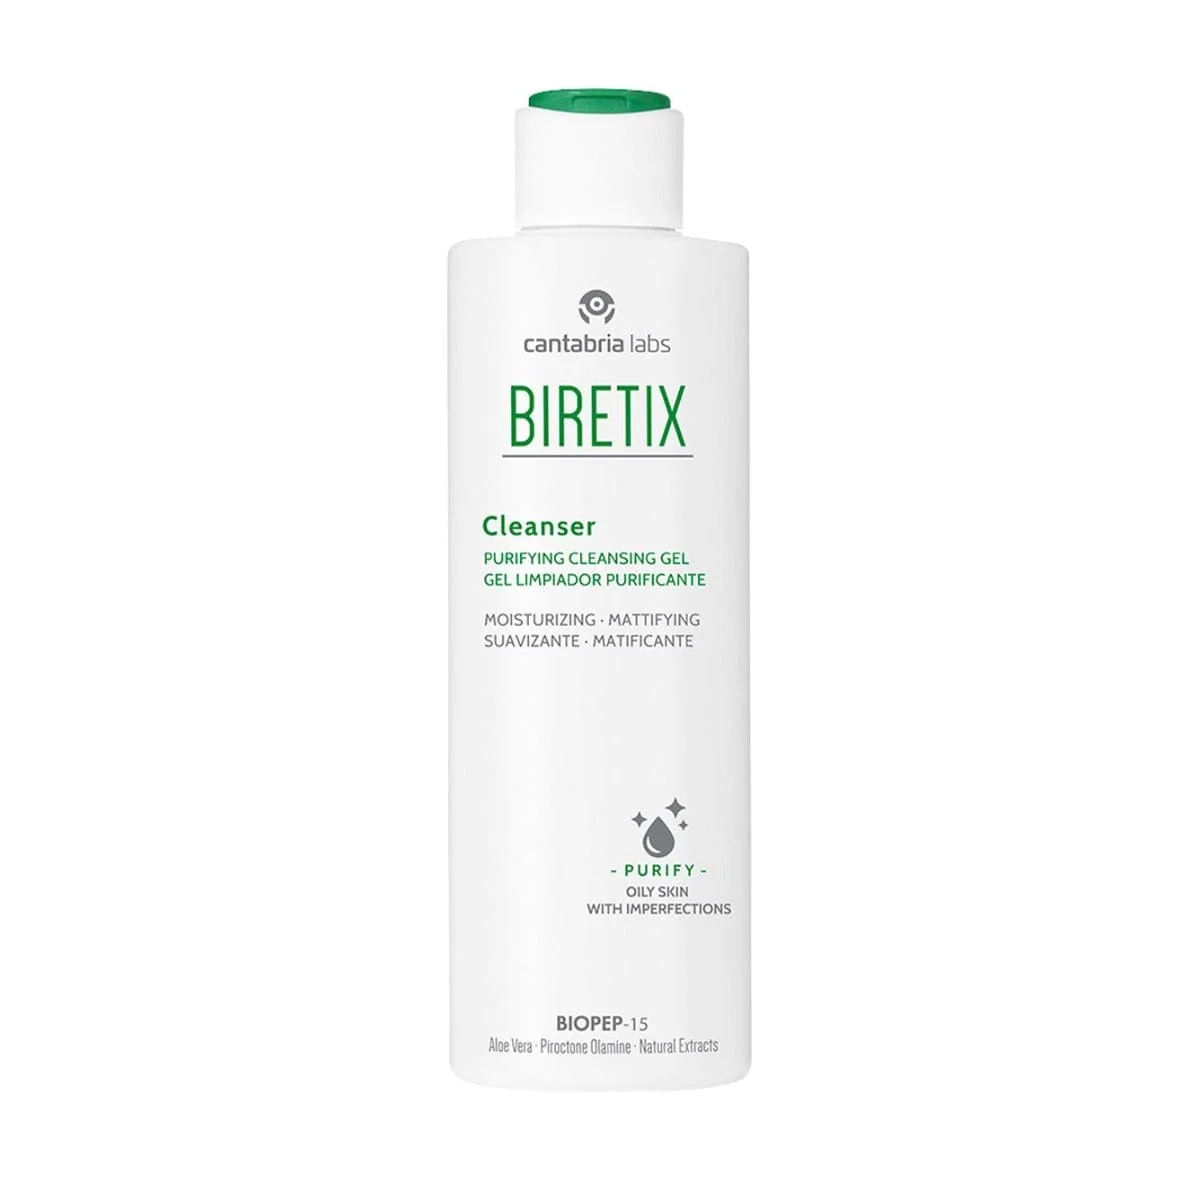 Biretix Cleanser – Purifying Cleansing Gel 200ml